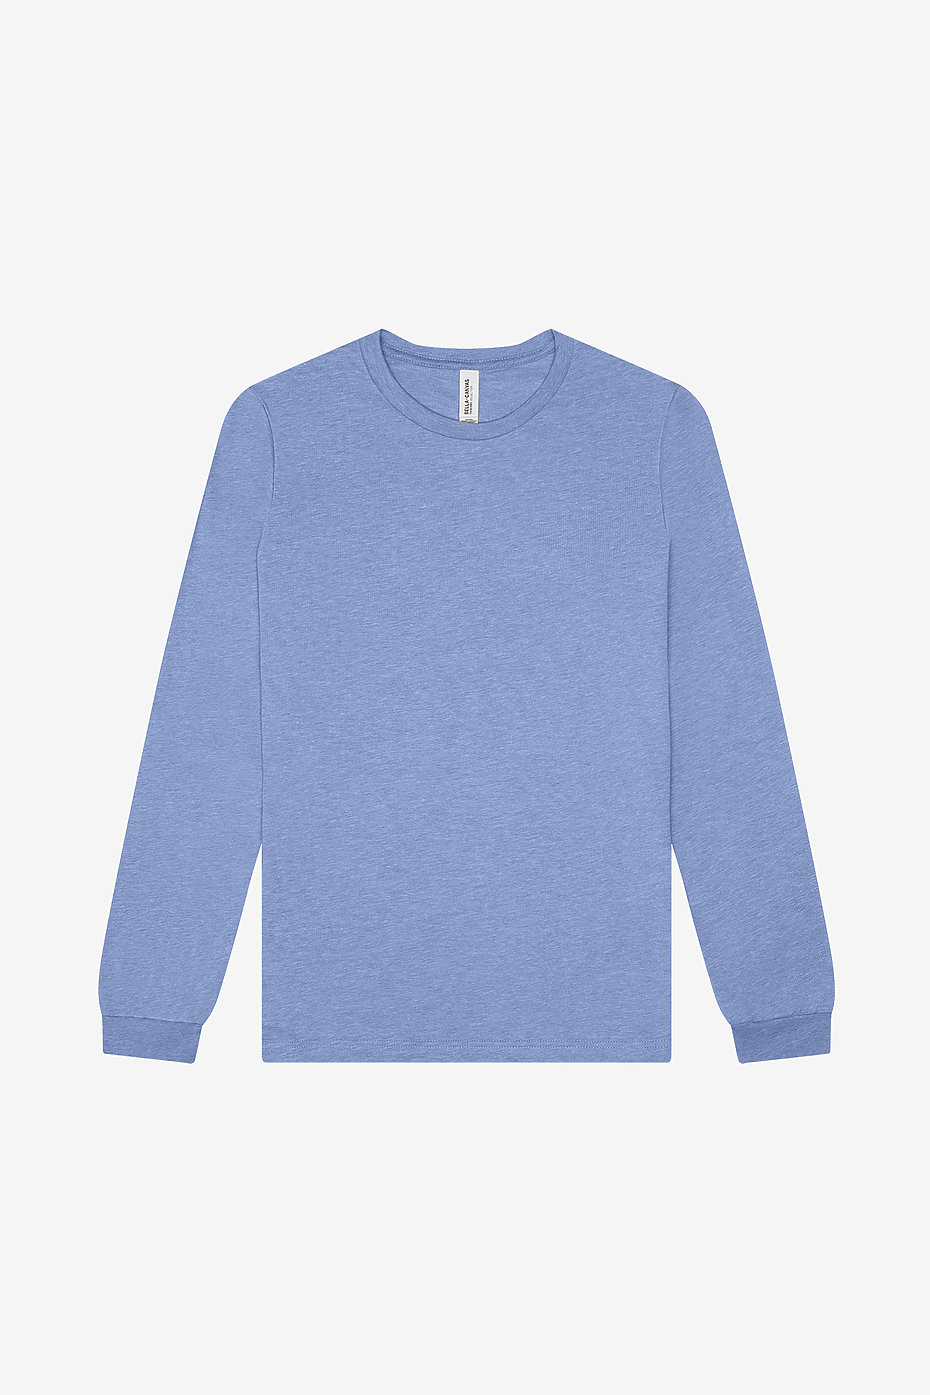 Customize Bella + Canvas Unisex 3/4 Sleeve Baseball T-Shirt